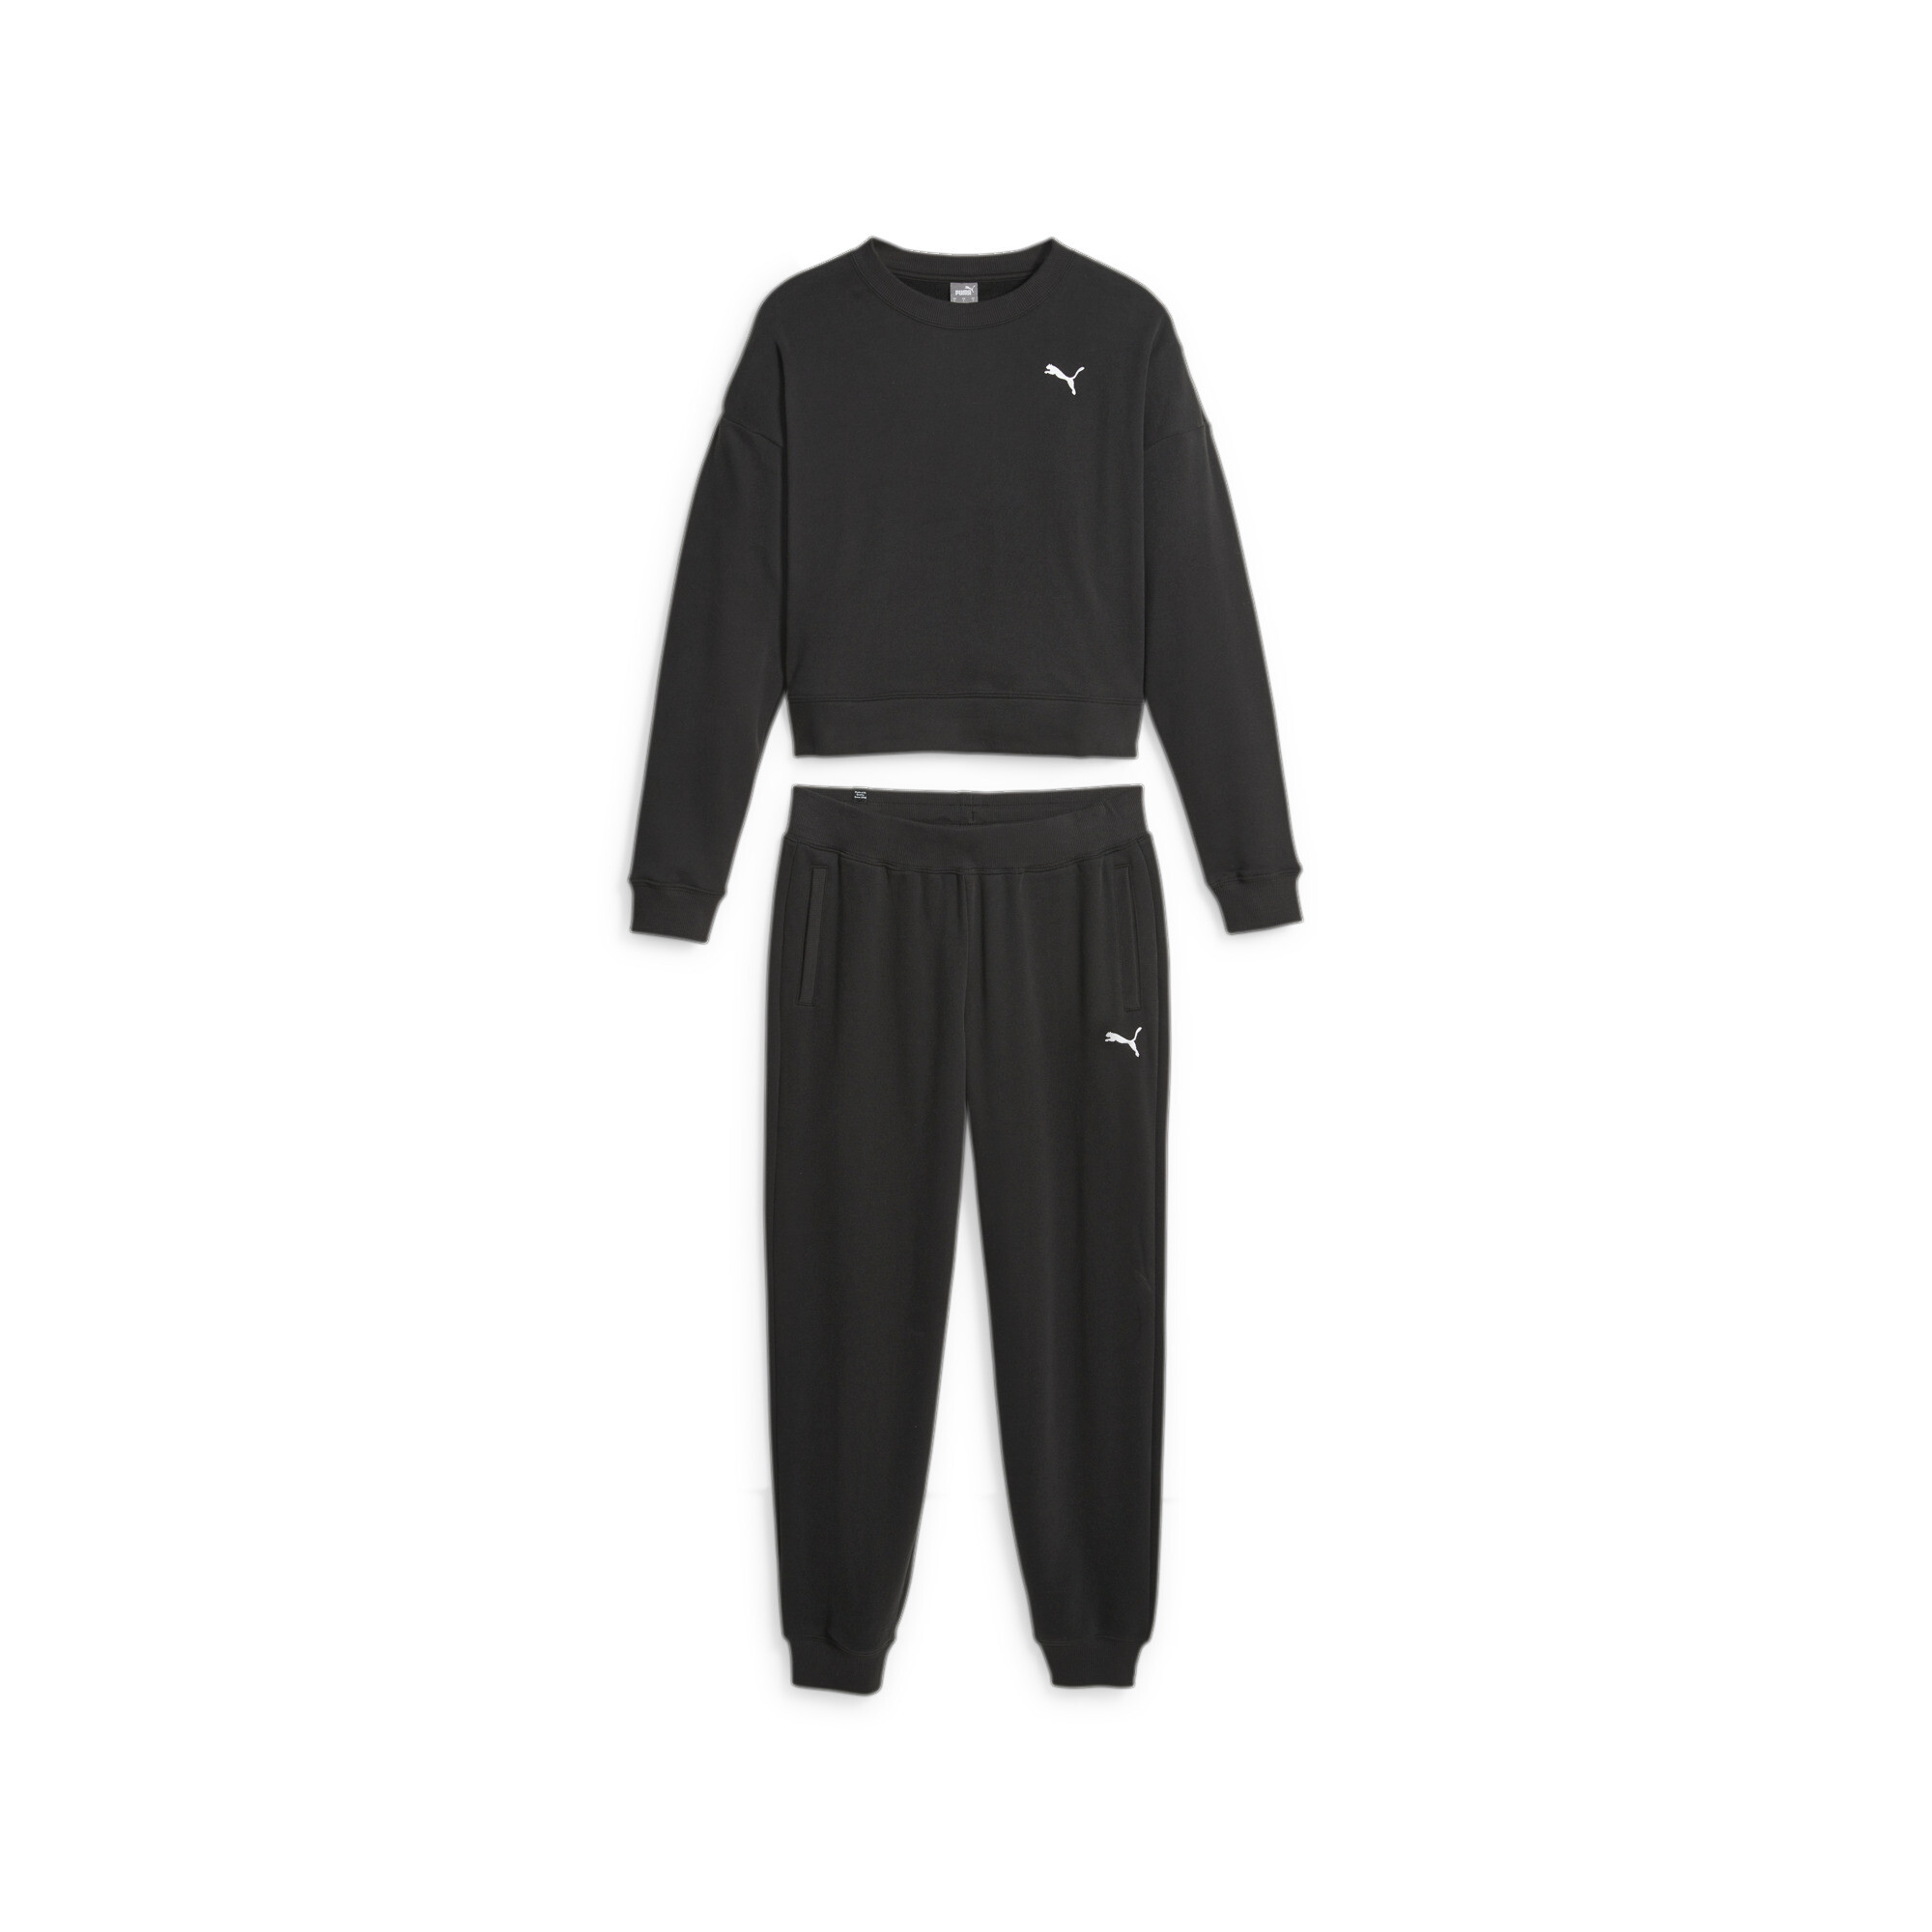 Women's Puma Women's Loungewear Suit, Black, Size XS, Clothing